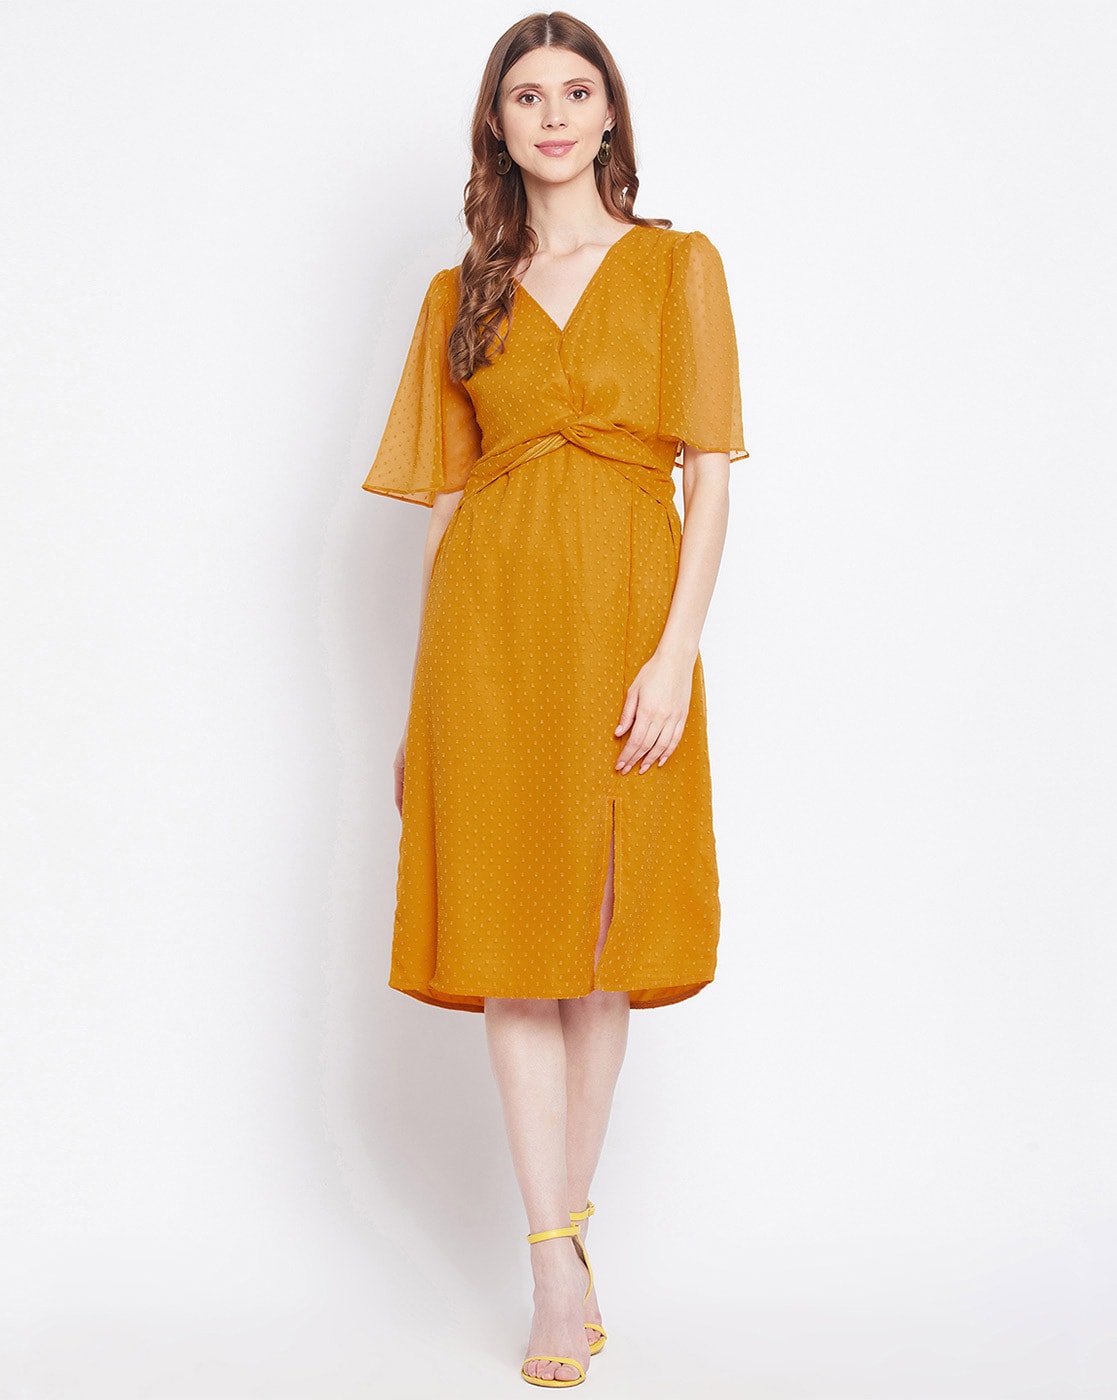 Buy Yellow Dresses for Women by Imfashini Online